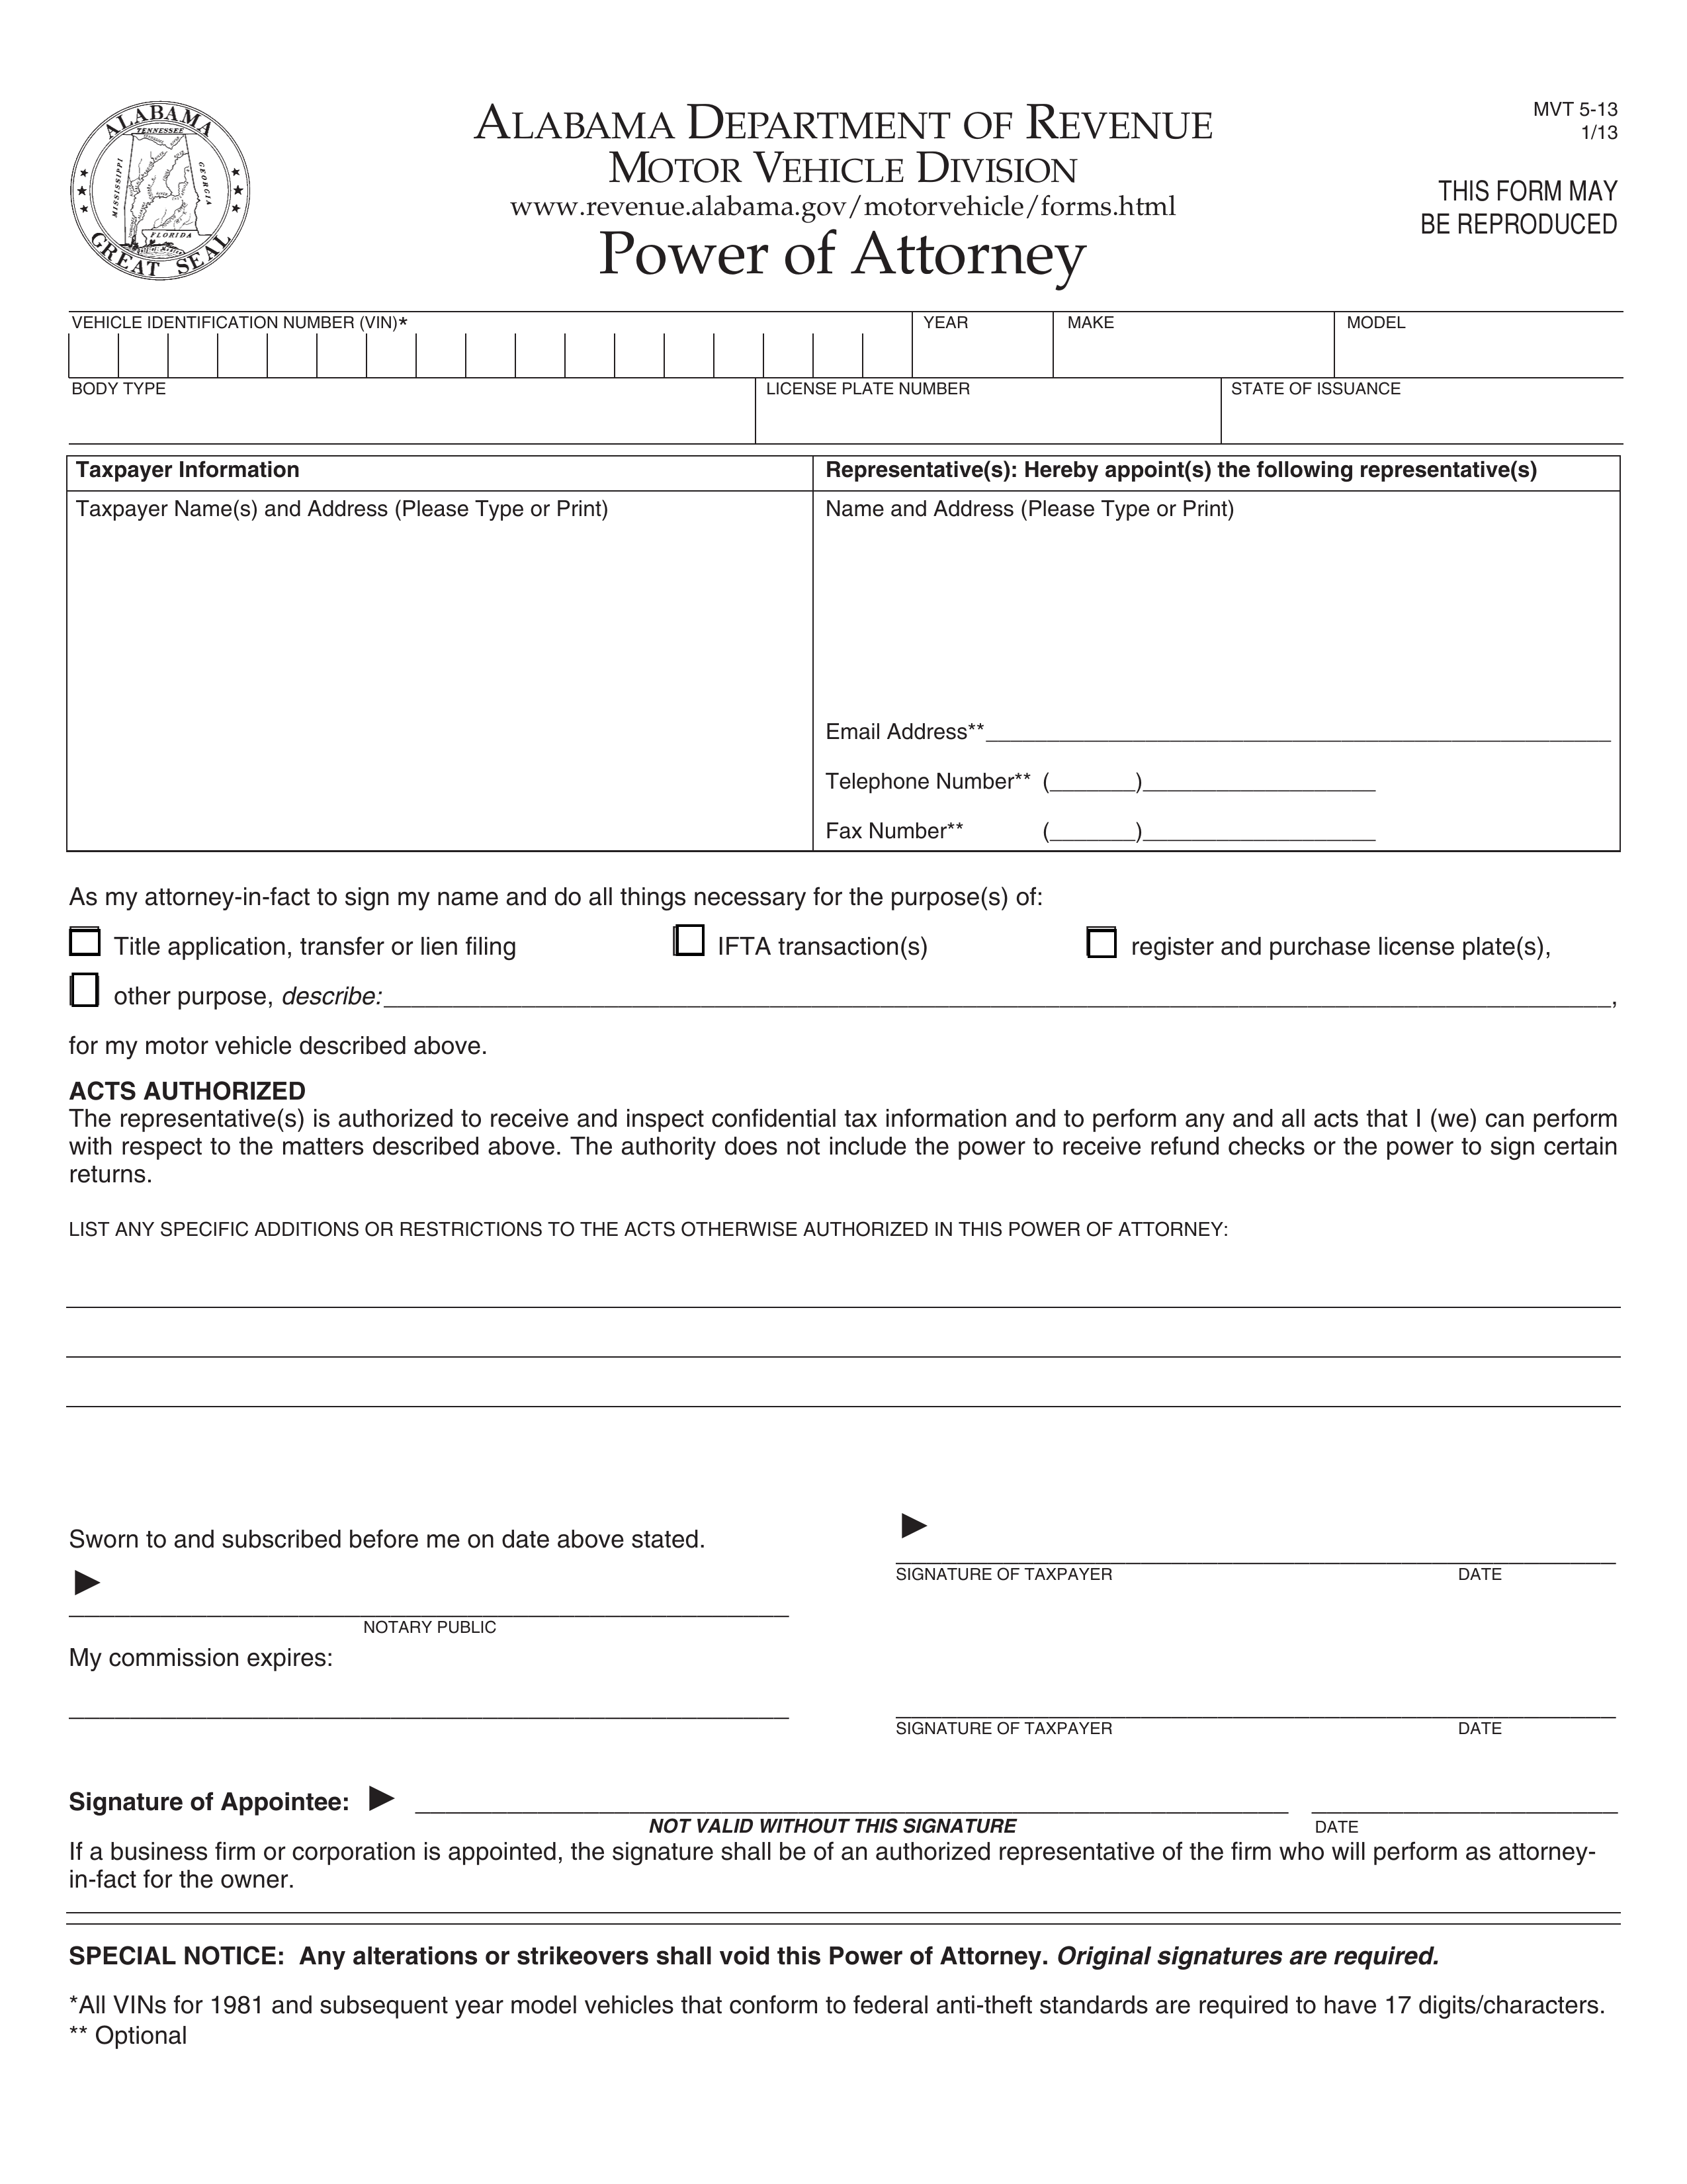 Alabama Motor Vehicle Power of Attorney Form | MVT 5-13